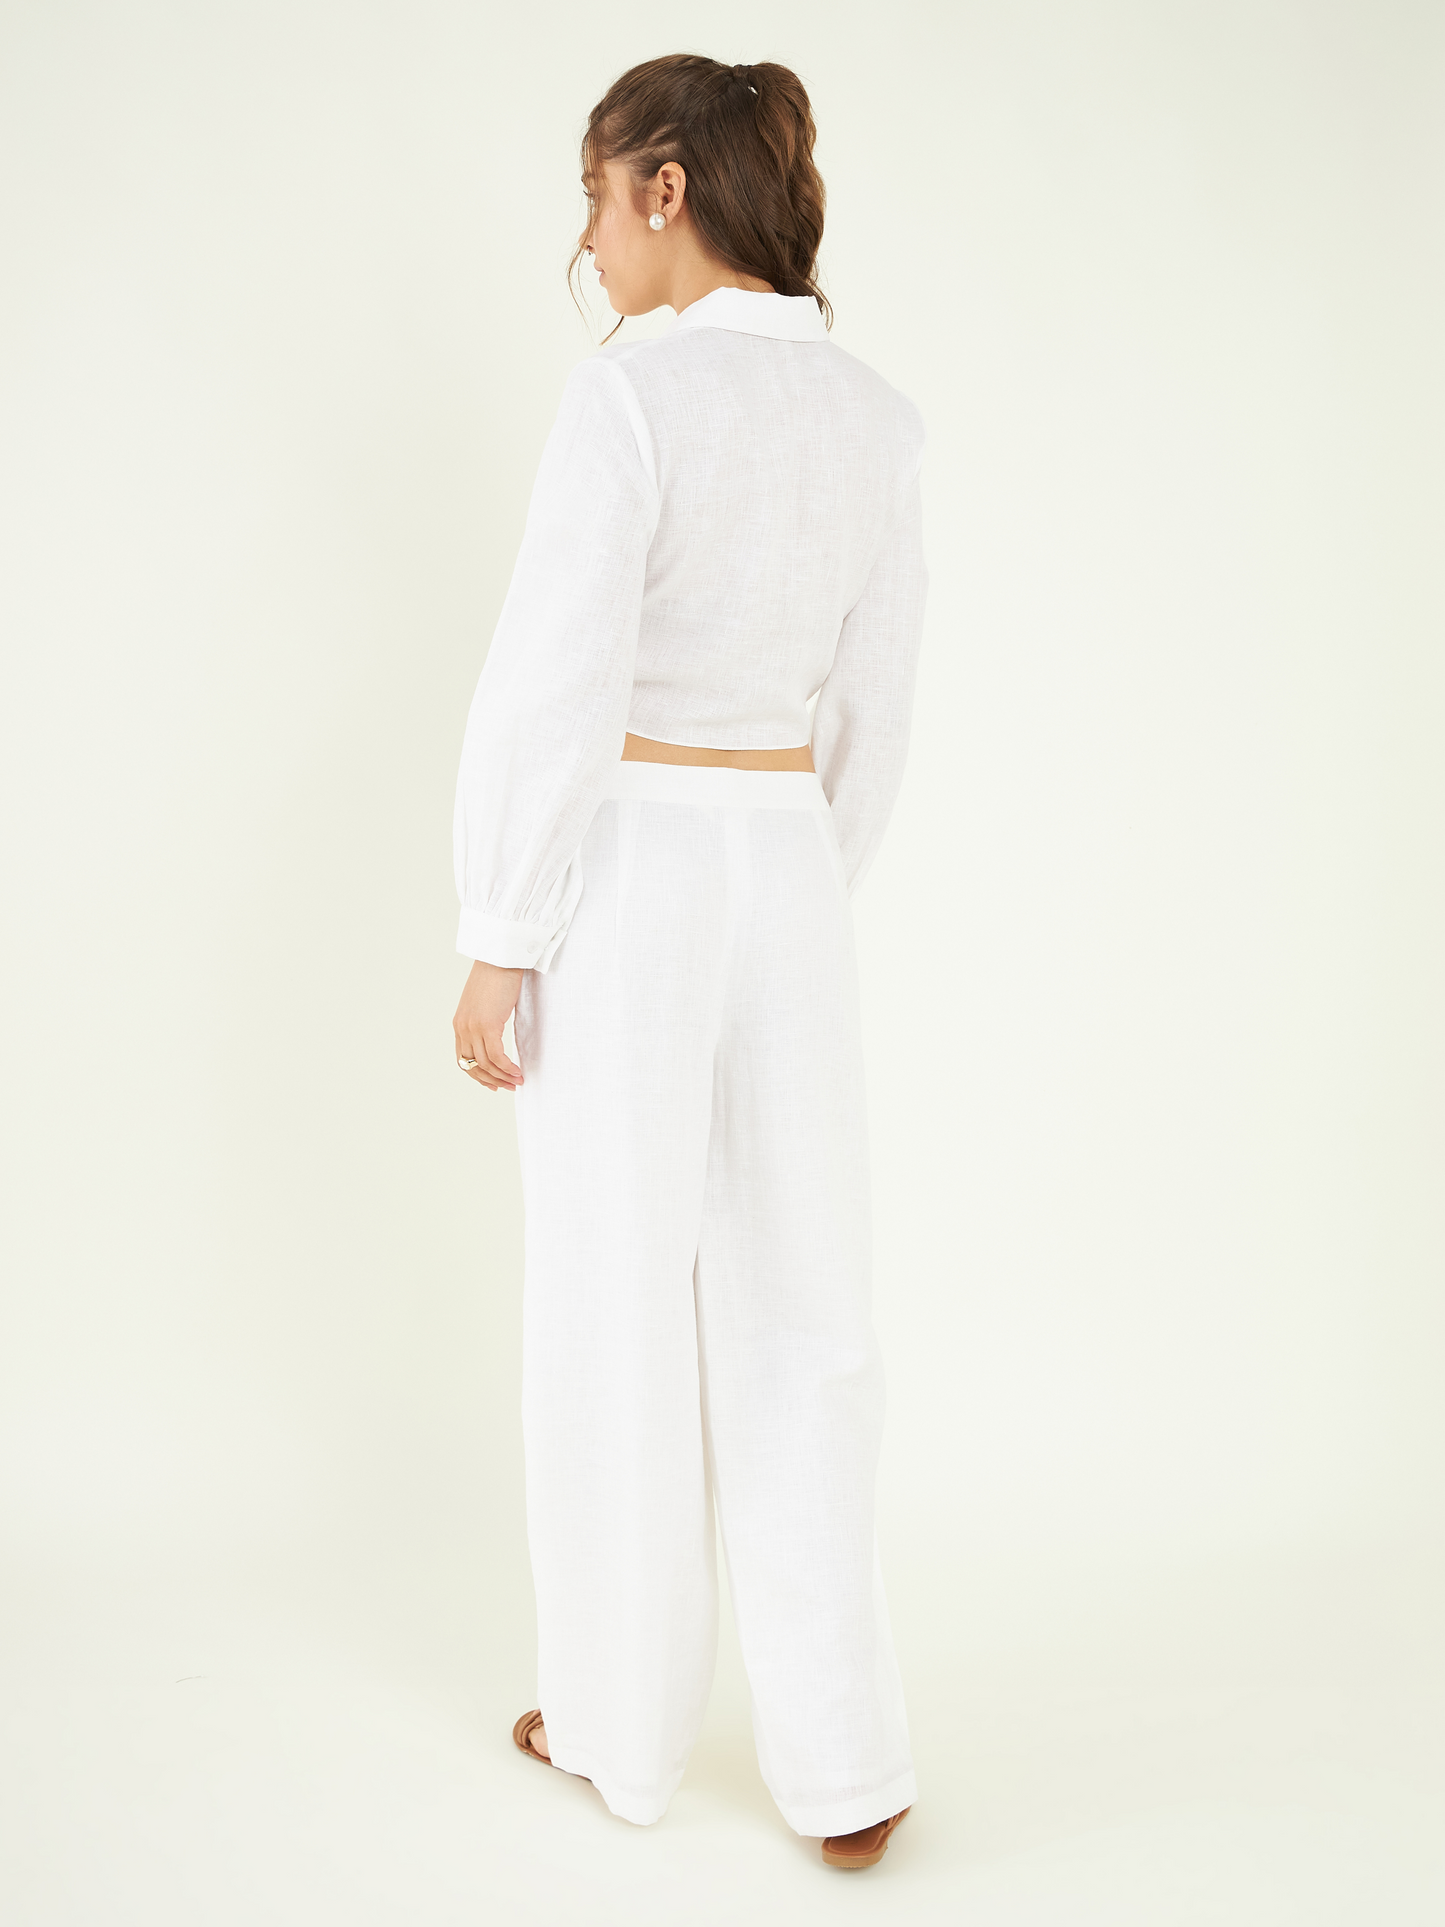 Blissful White Co-ord Set by Bohobi with at Kamakhyaa for sustainable fashion